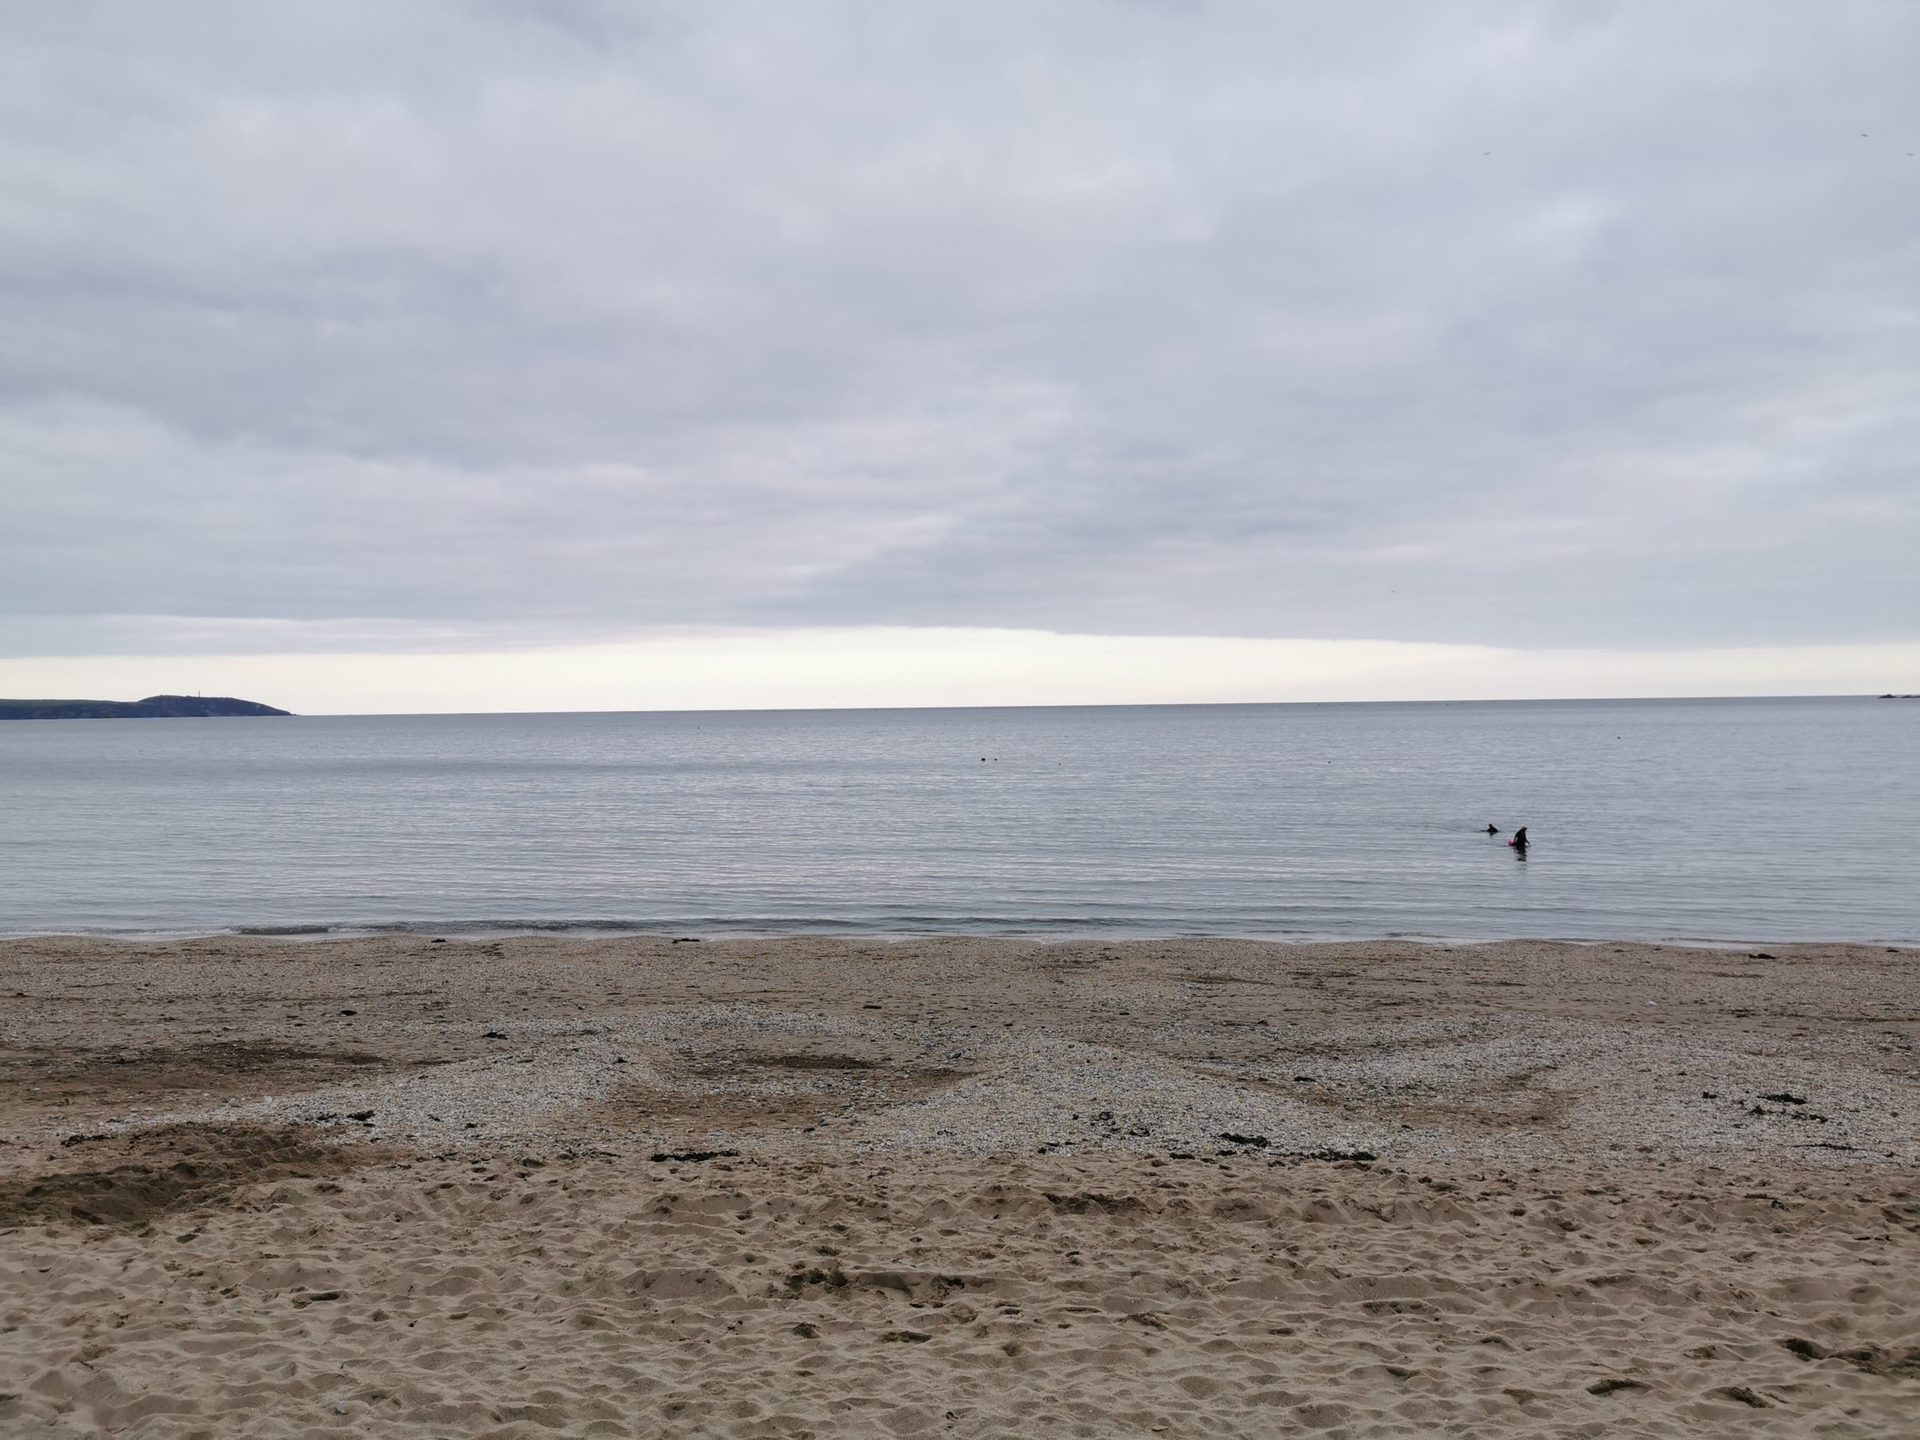 Huawei P30 Pro 1x photo sample of the sea